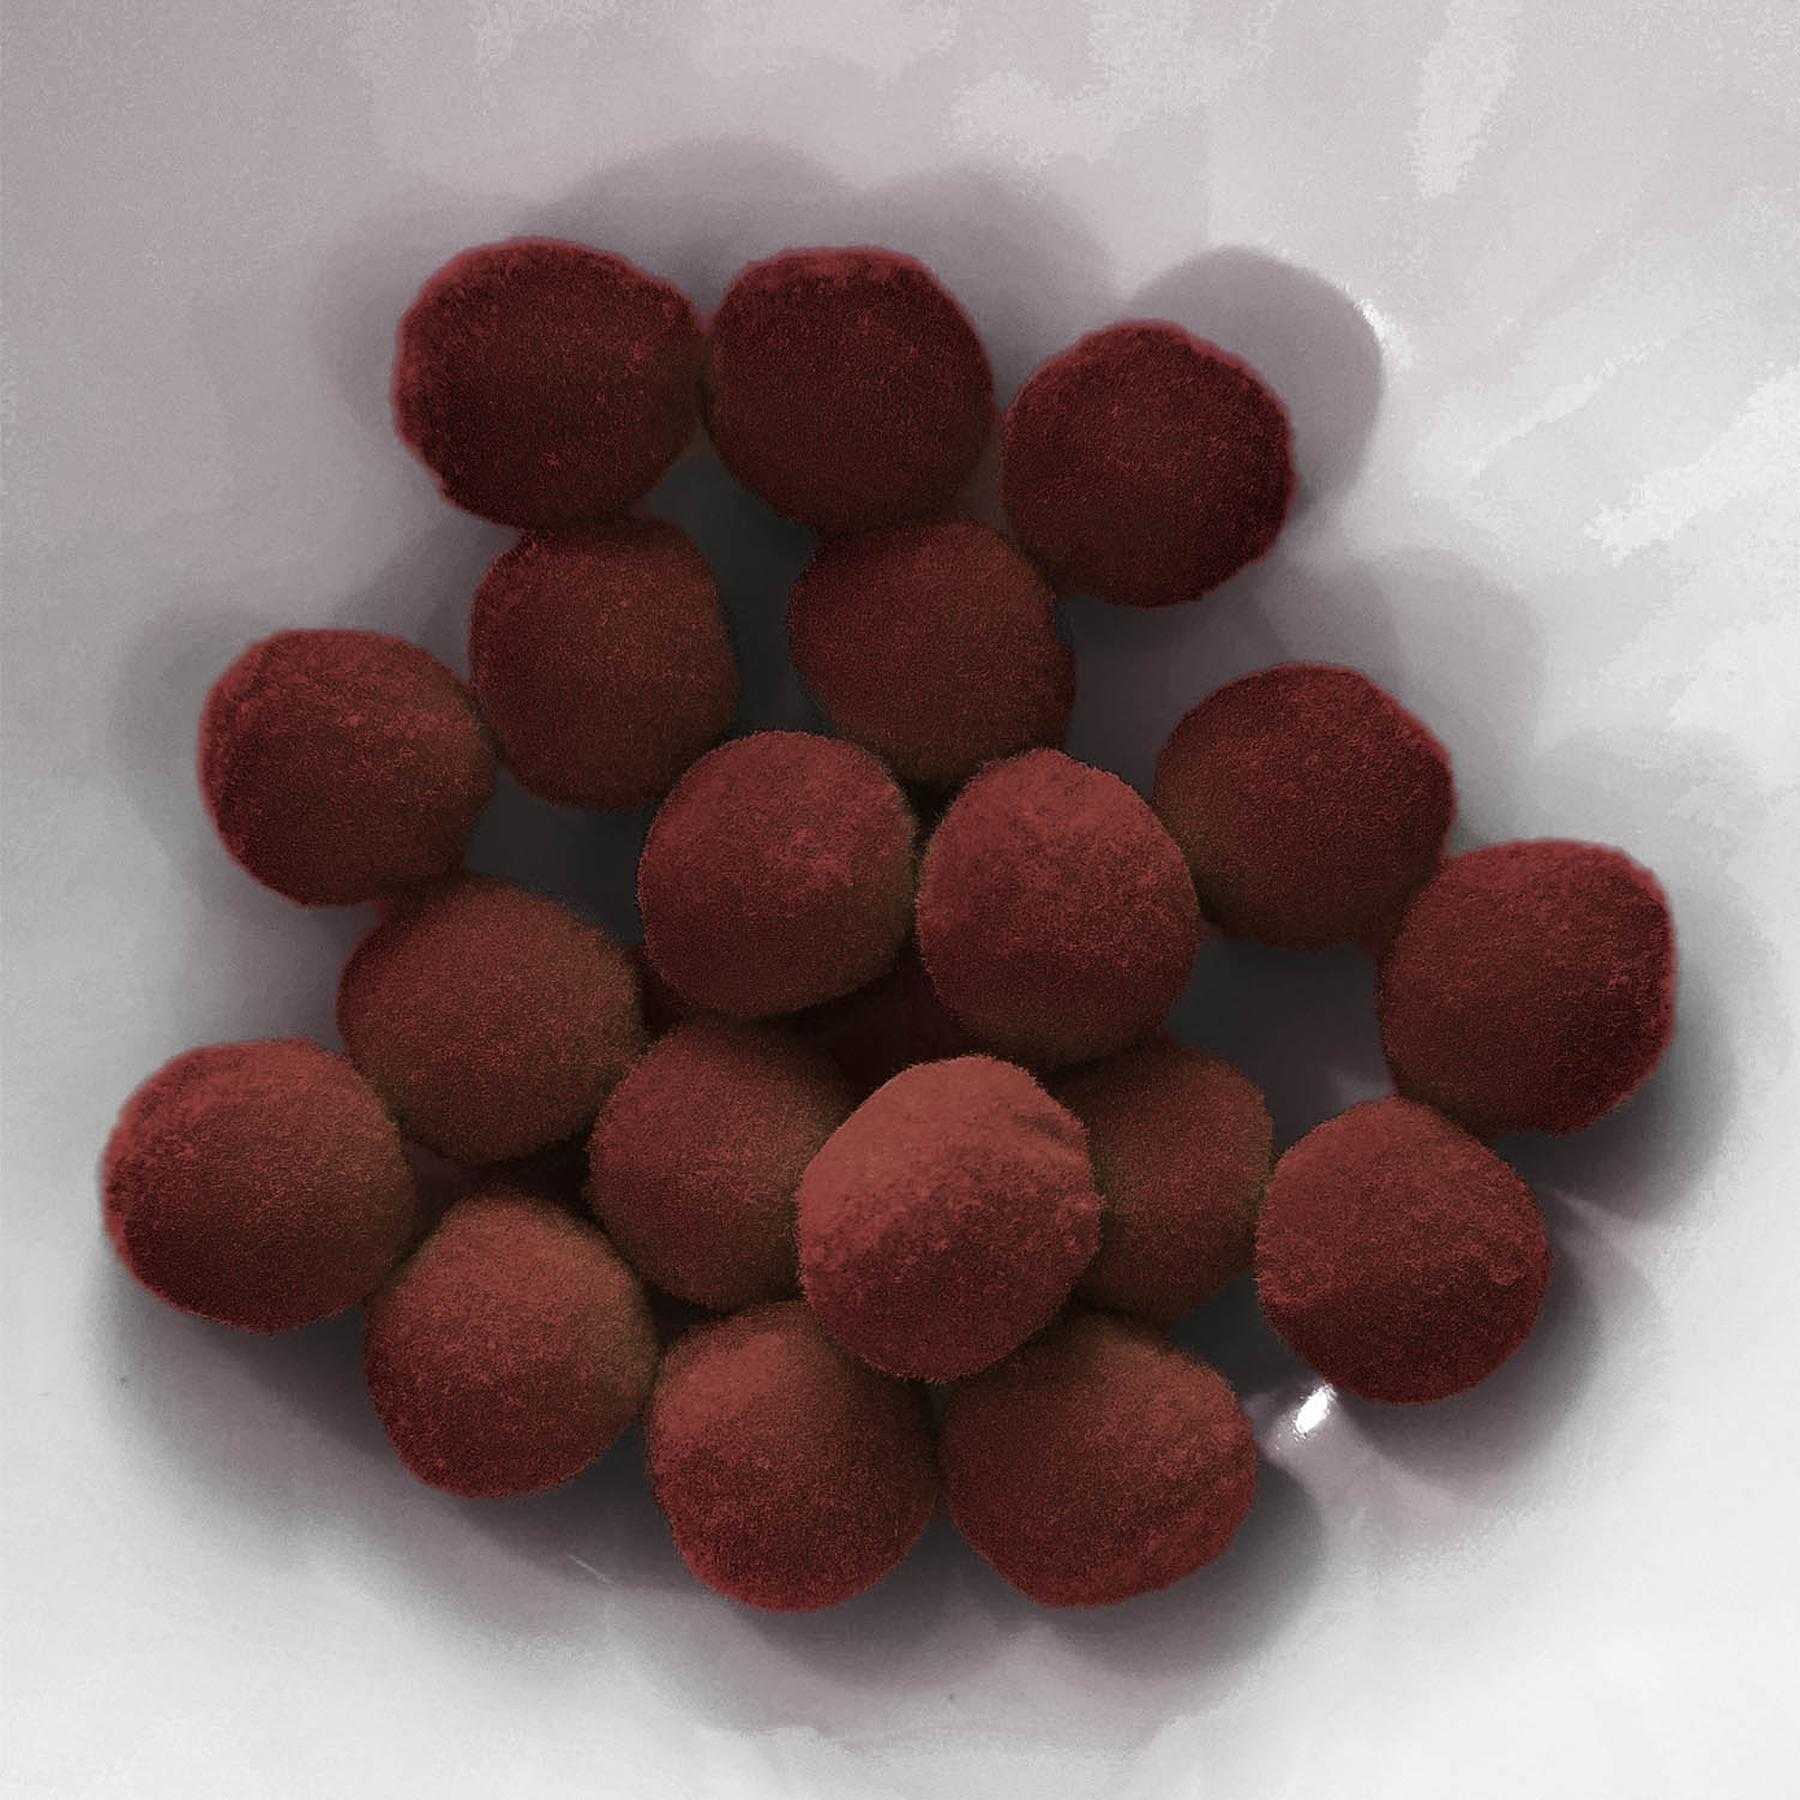 PomPon / Bälle aus Baumwolle - 12 mm / 40er Set - Rot dunkel / Bordeaux